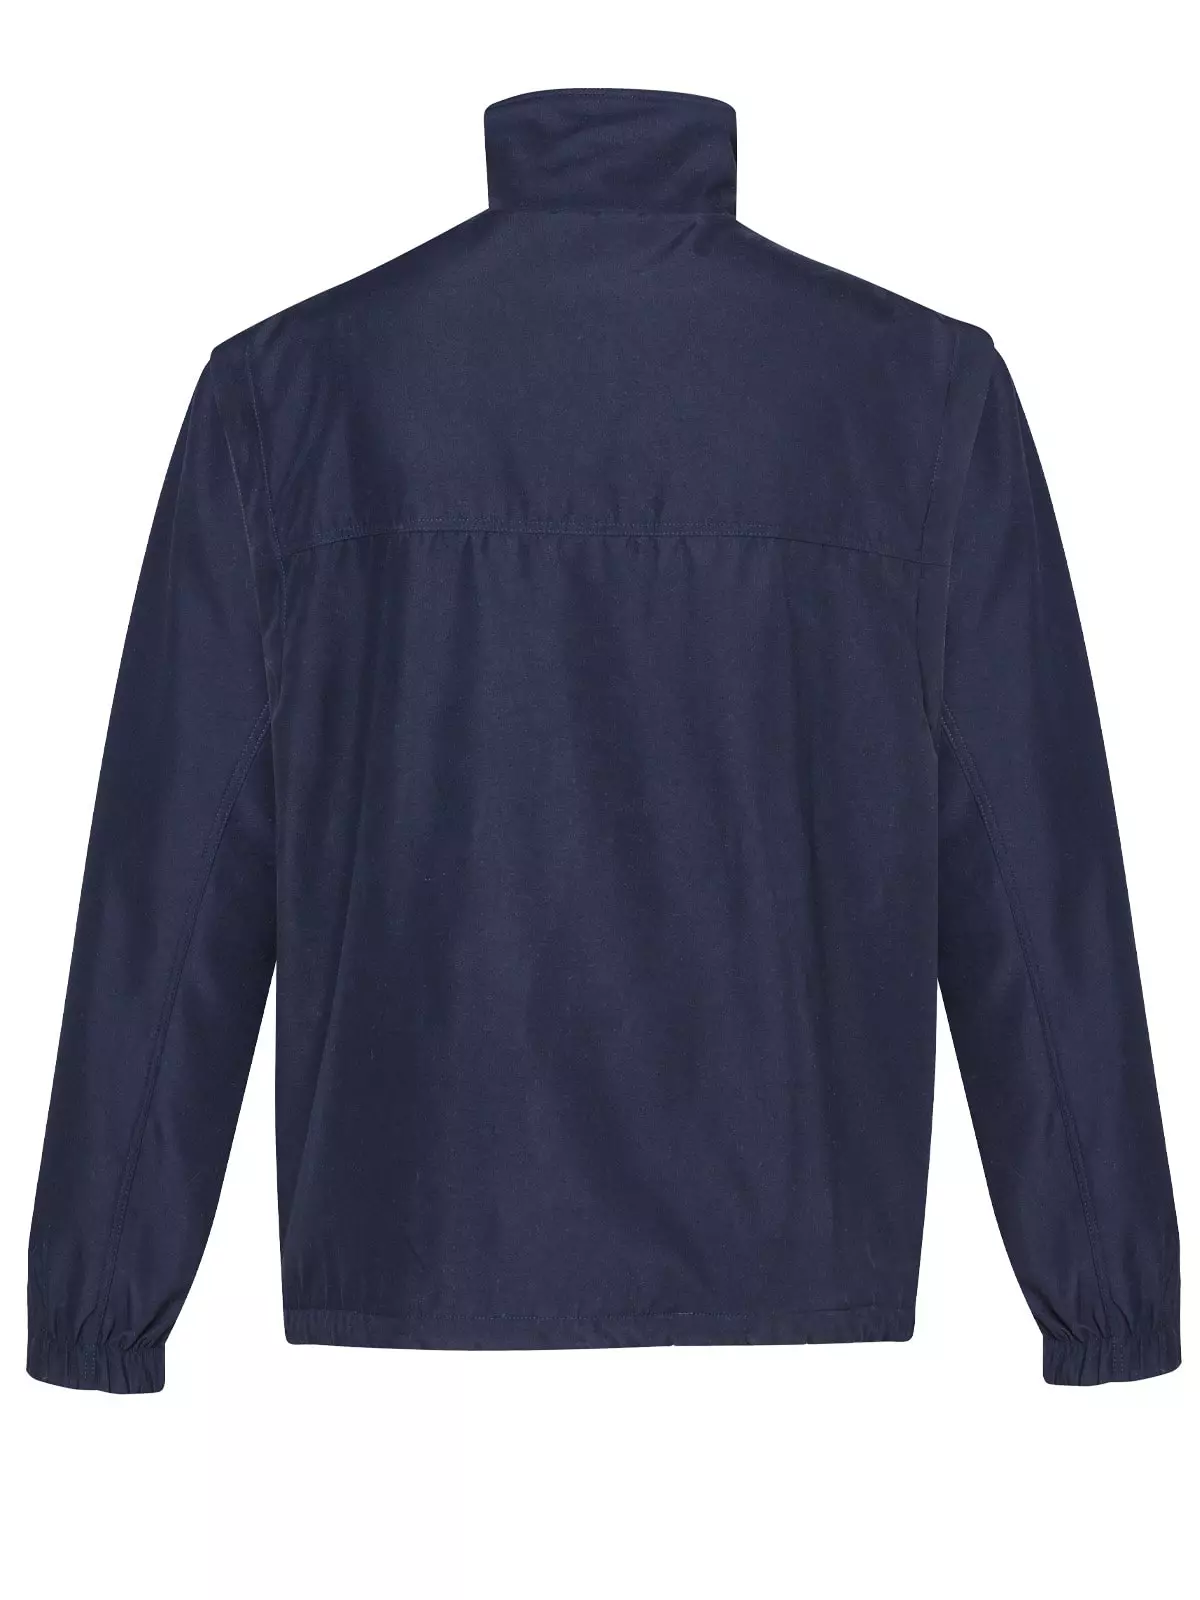 jacket removable sleevs navy